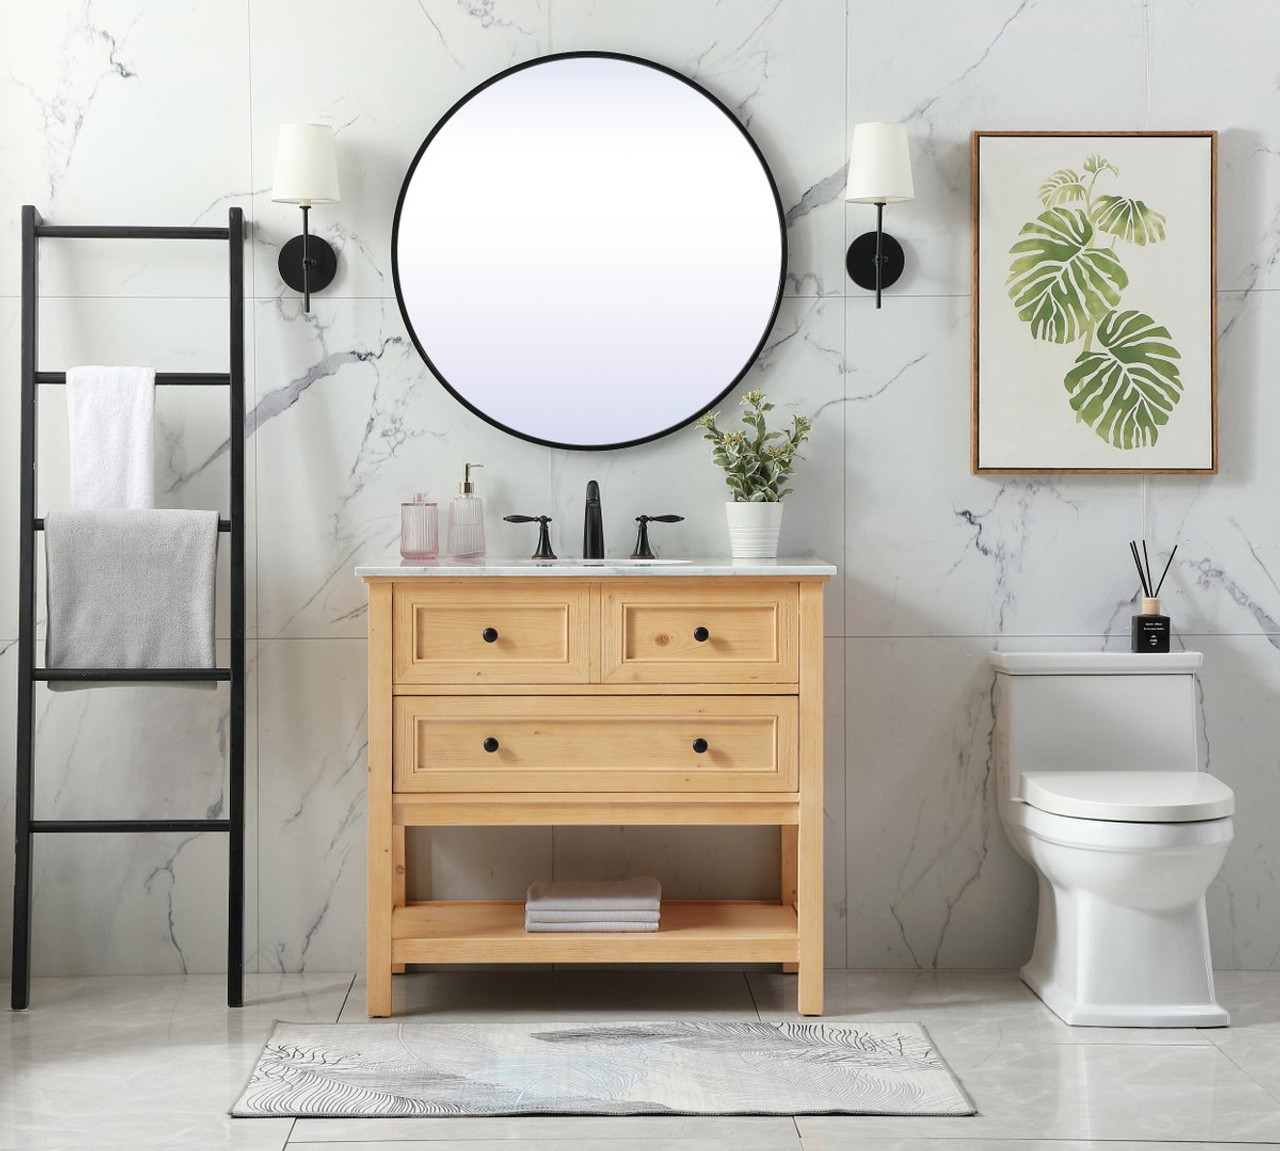 Elegant Decor VF27036NW 36 inch single bathroom vanity in natural wood